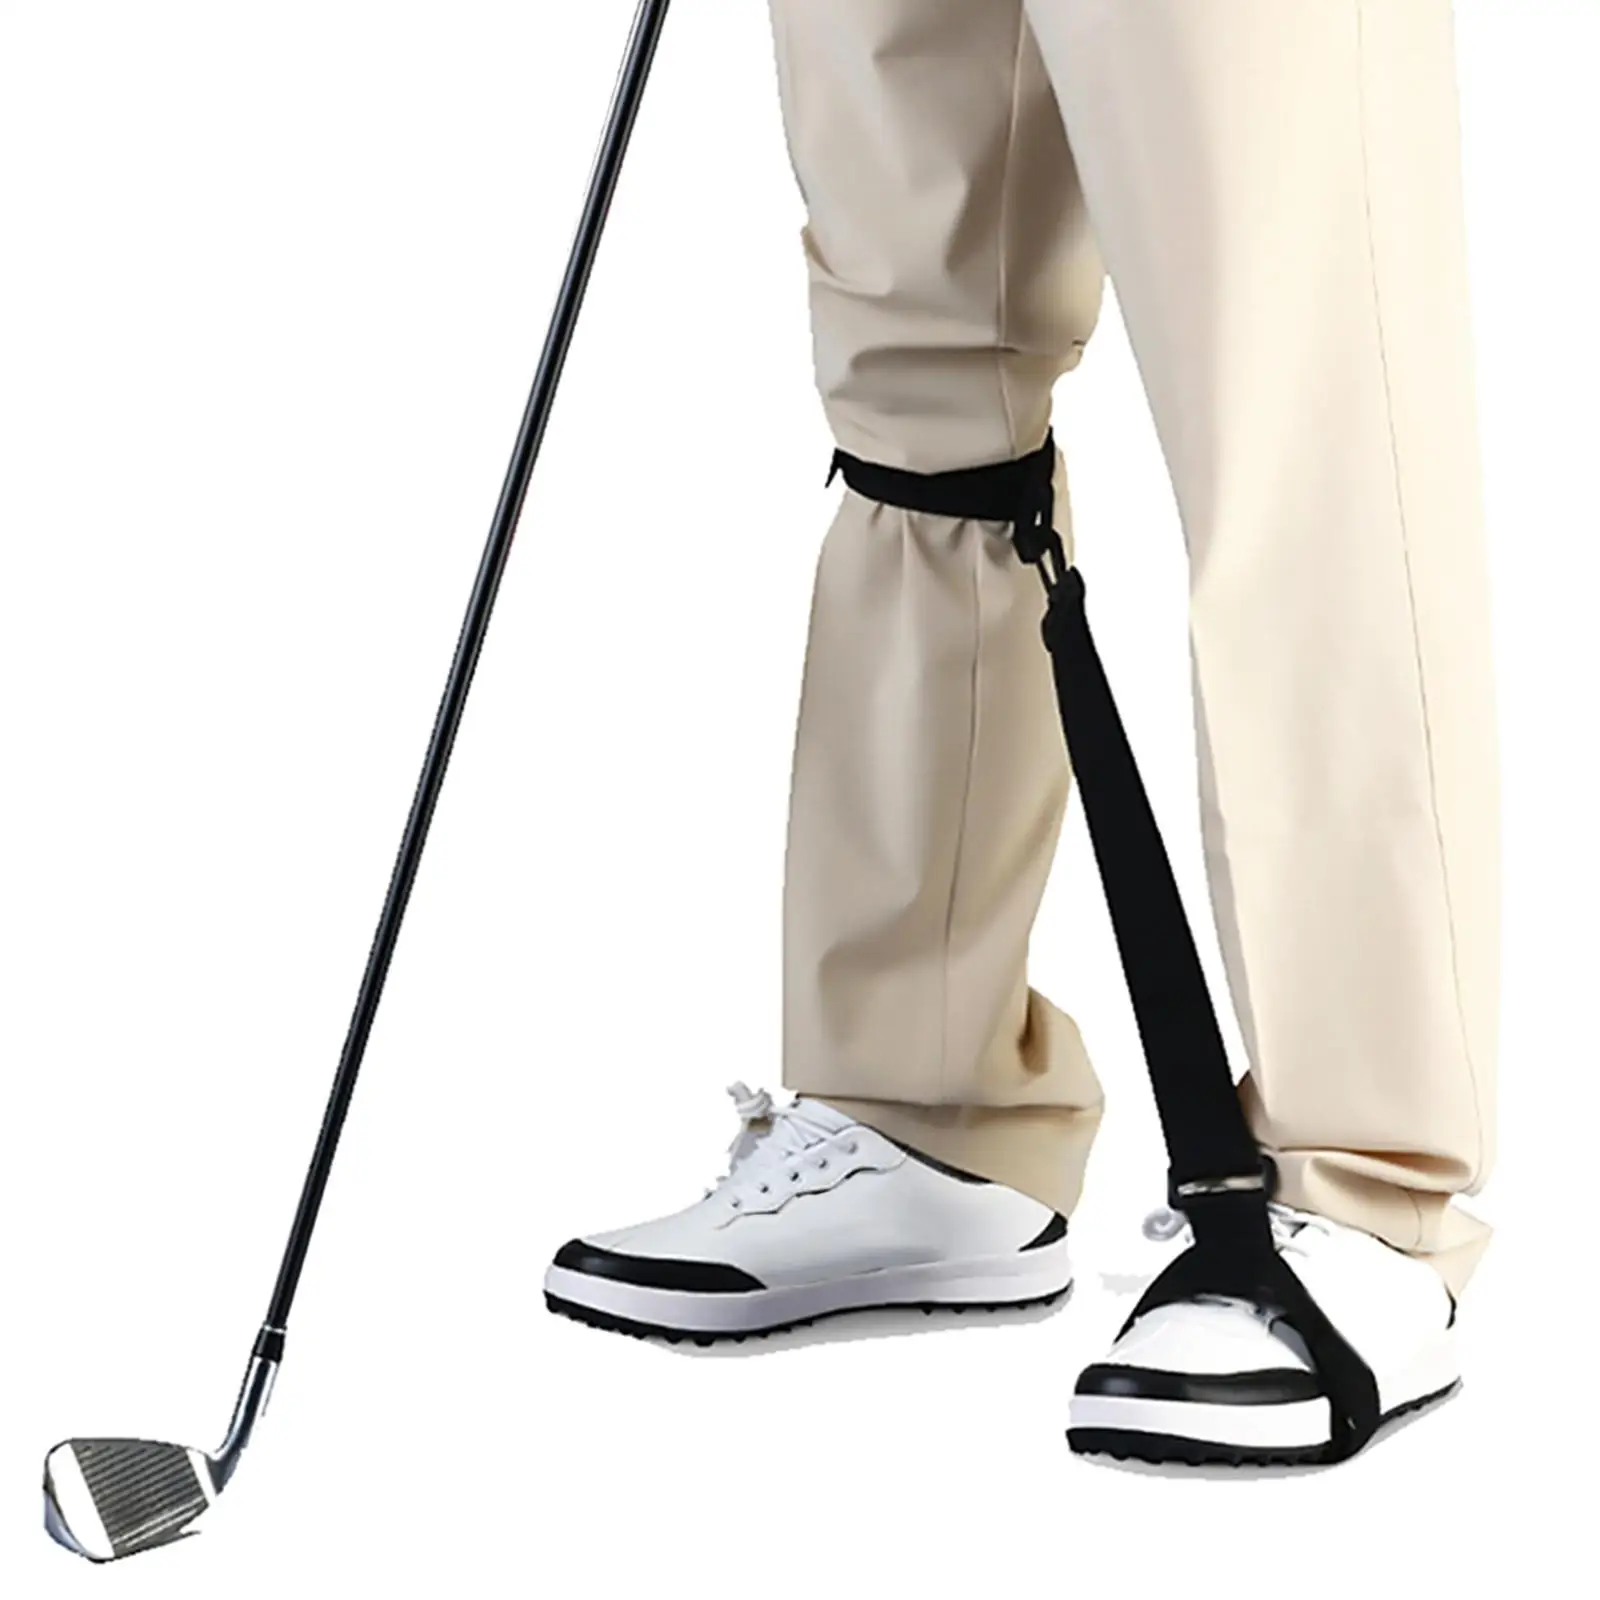 Golf Leg Posture Correct Belt Leg Strap Golf Swing Training Aid Leg Brace for Teenagers